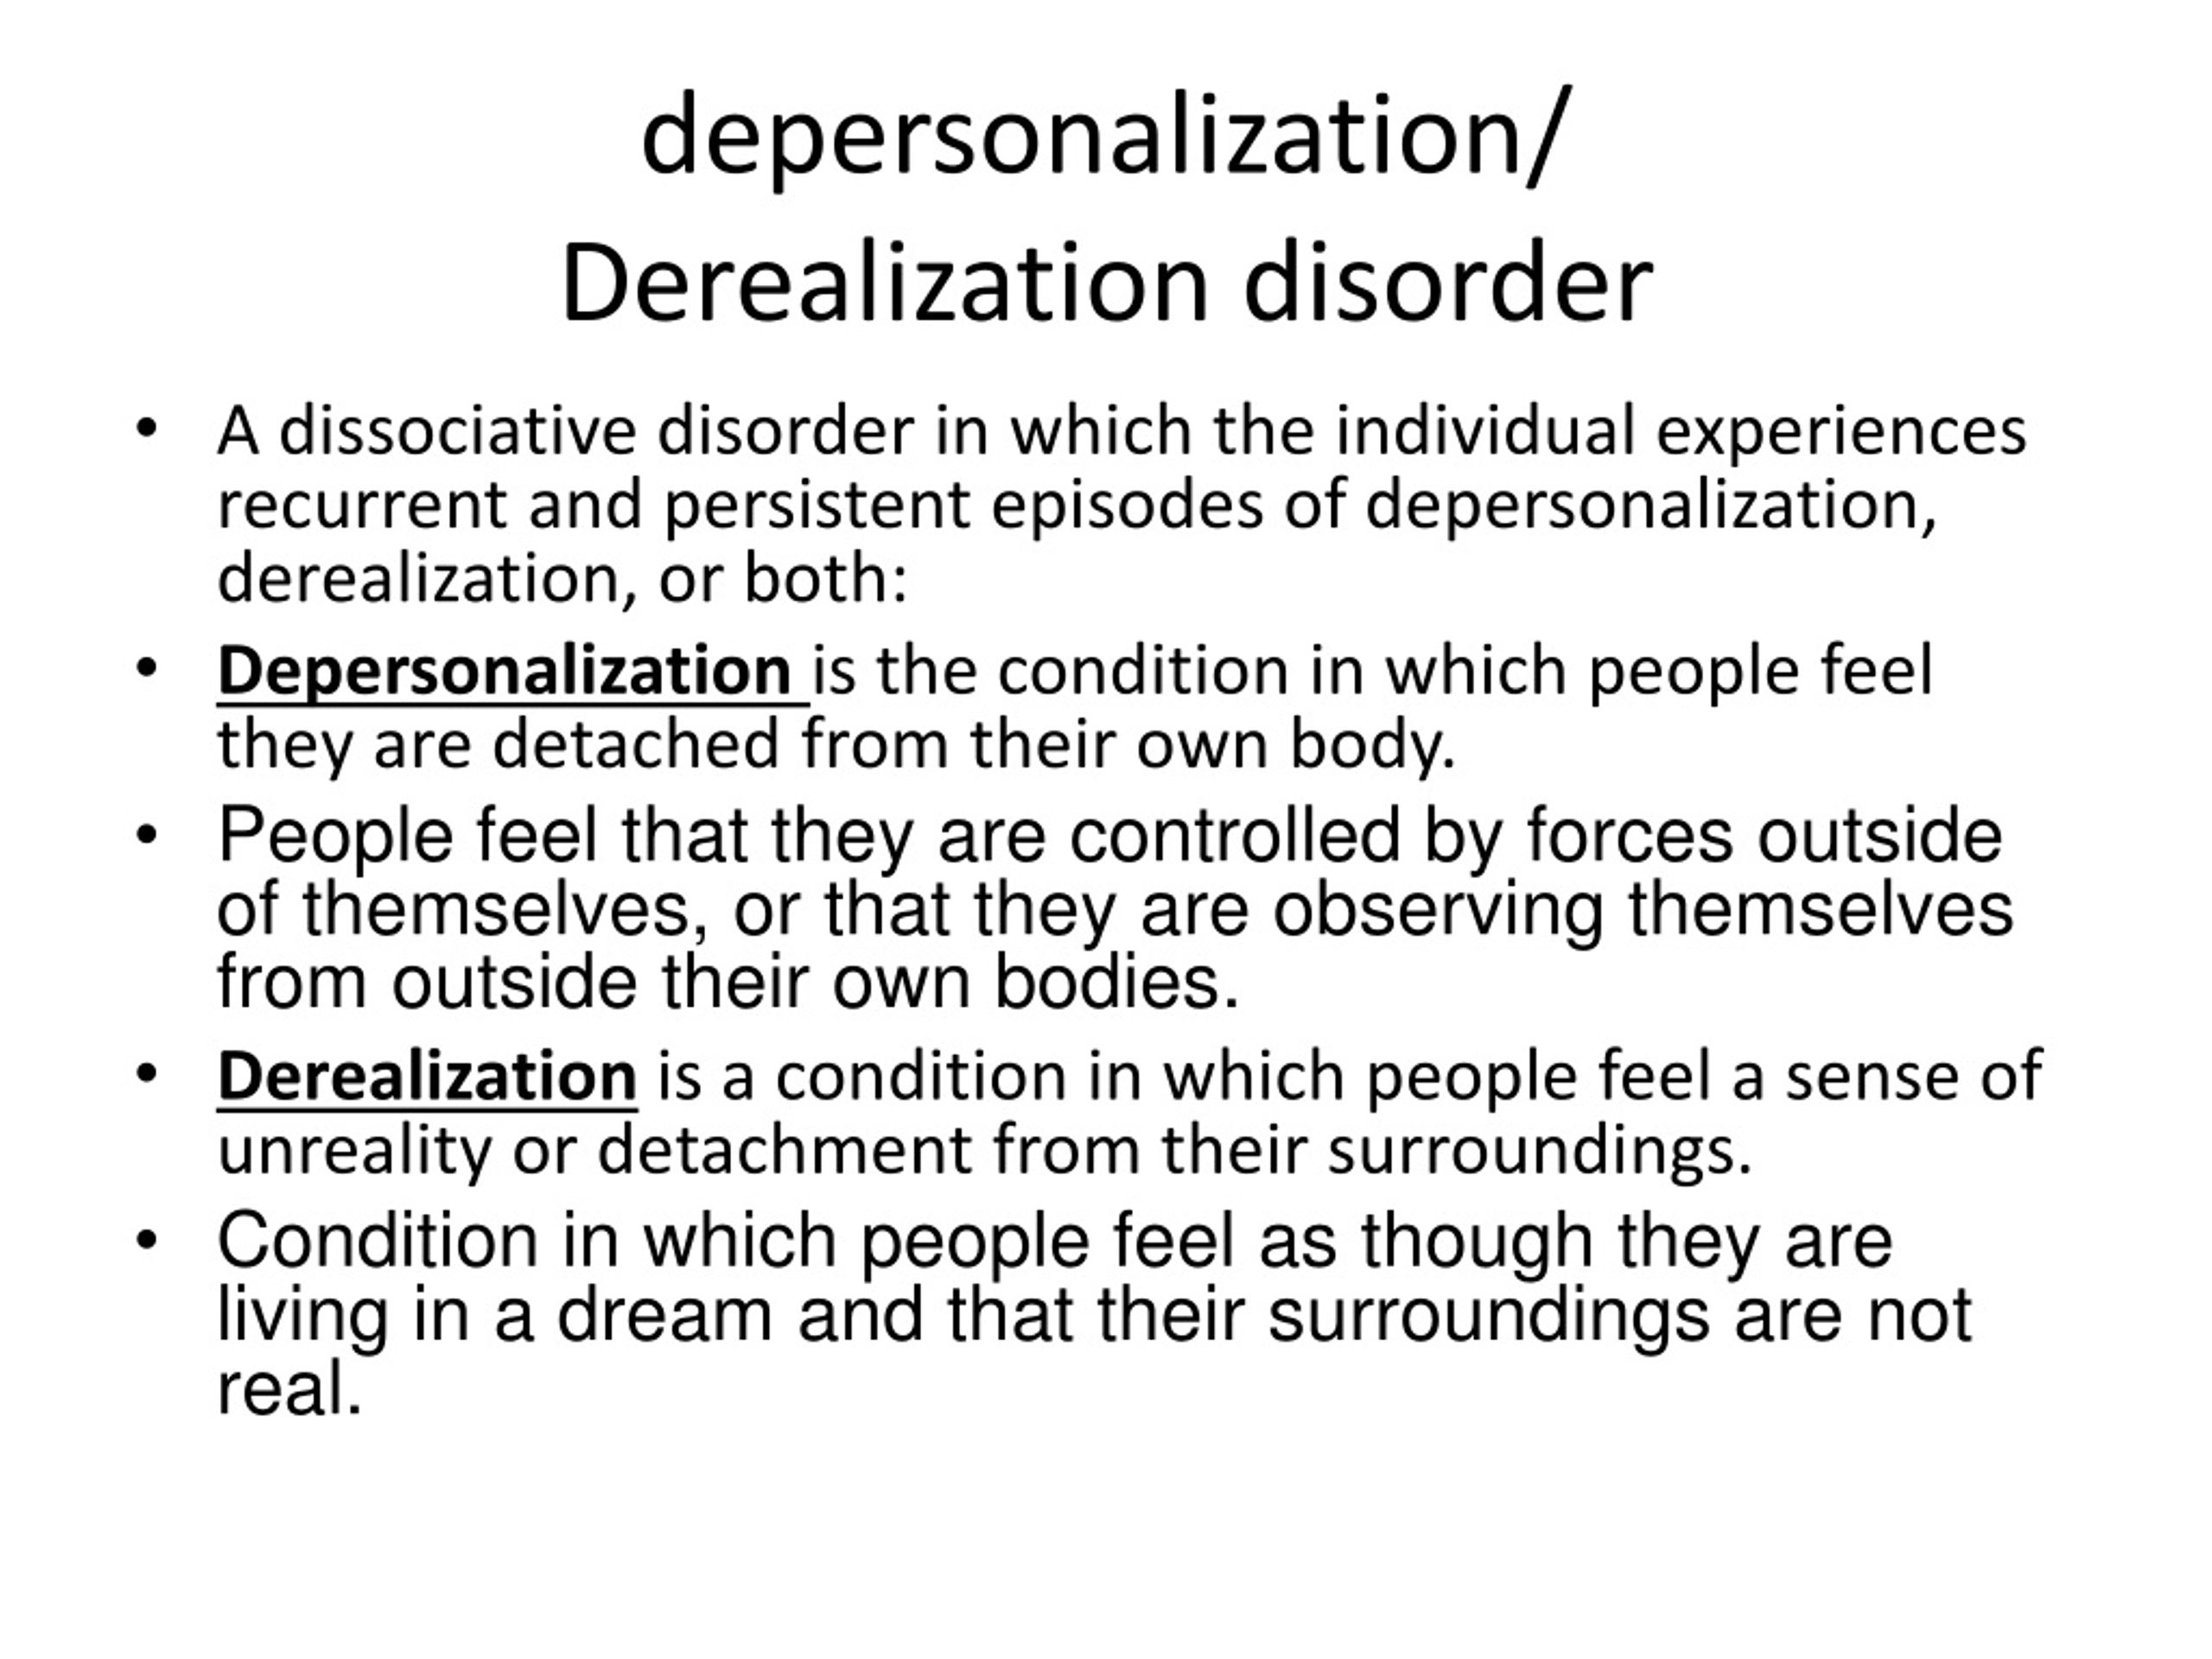 depersonalization treatments